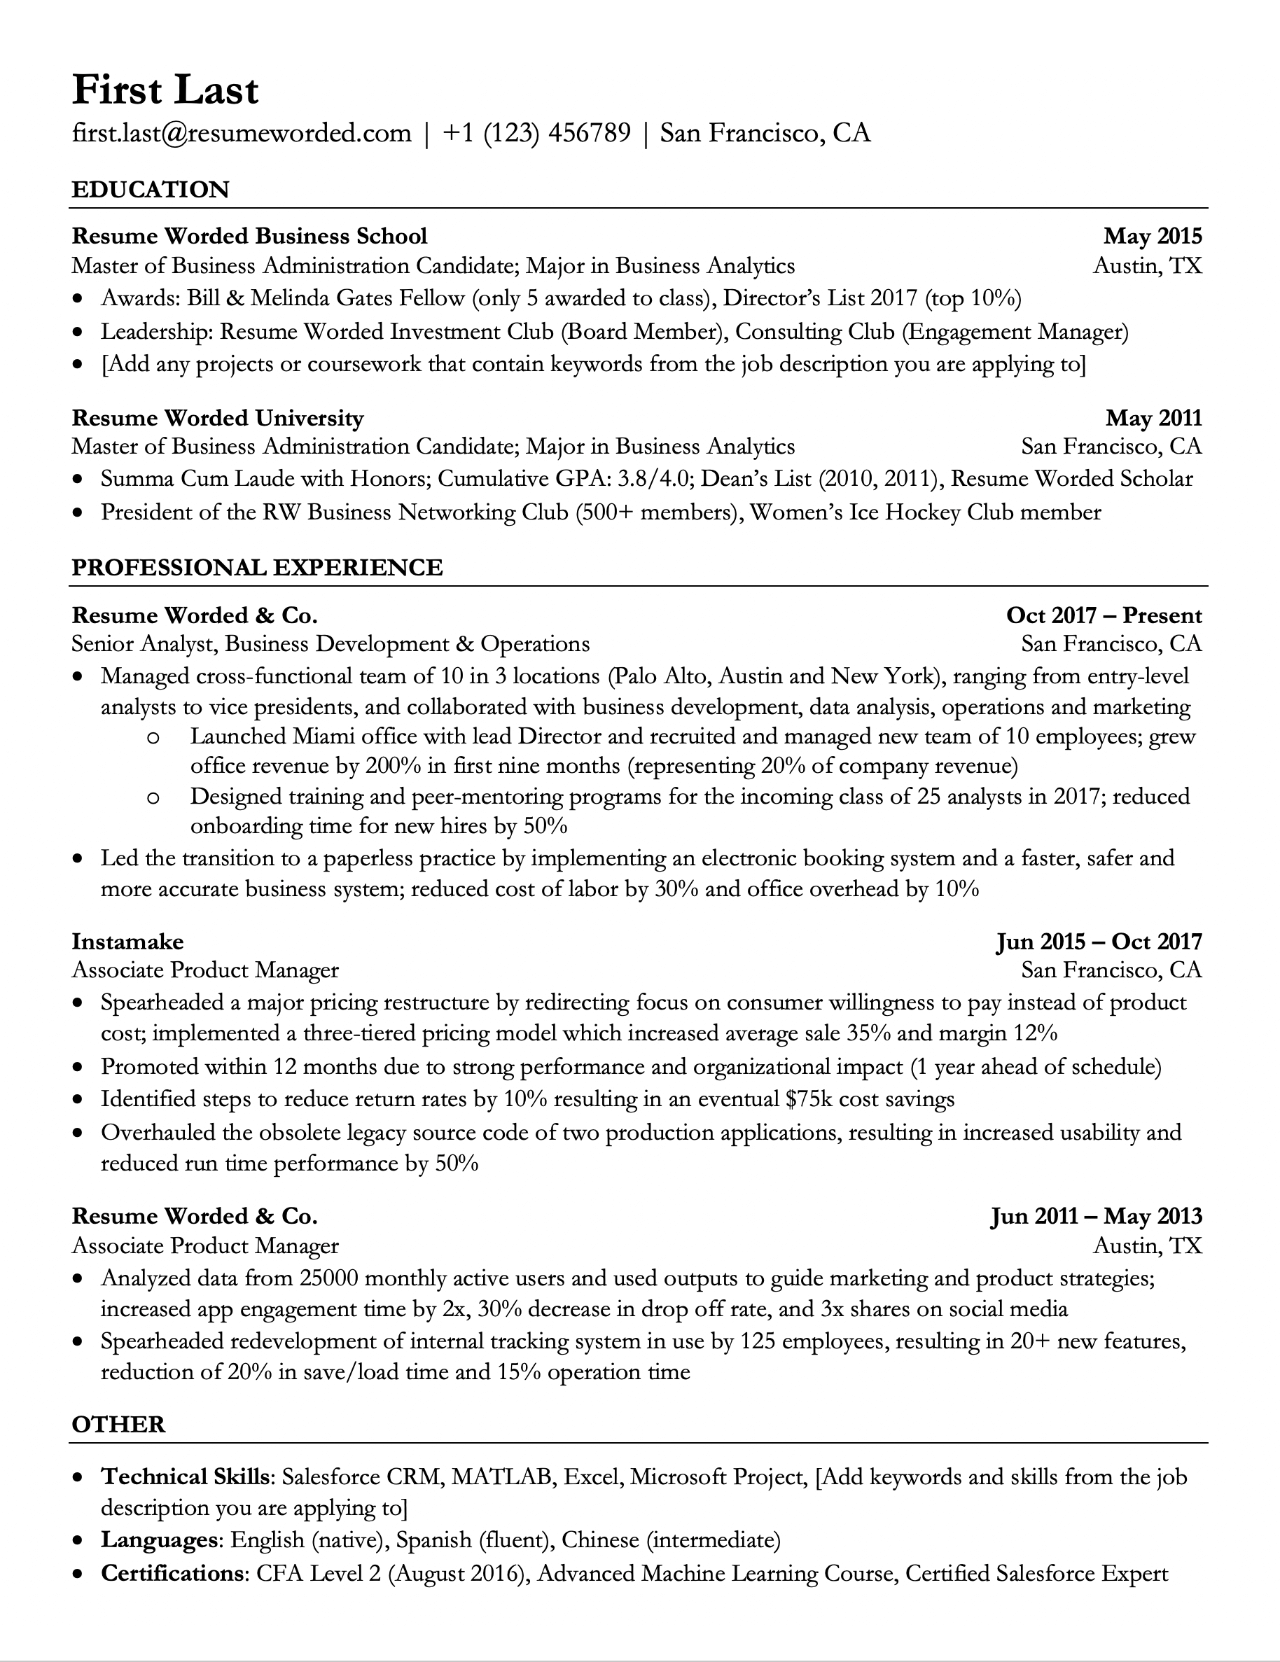 Recent Grad Resume Template from resumeworded.com